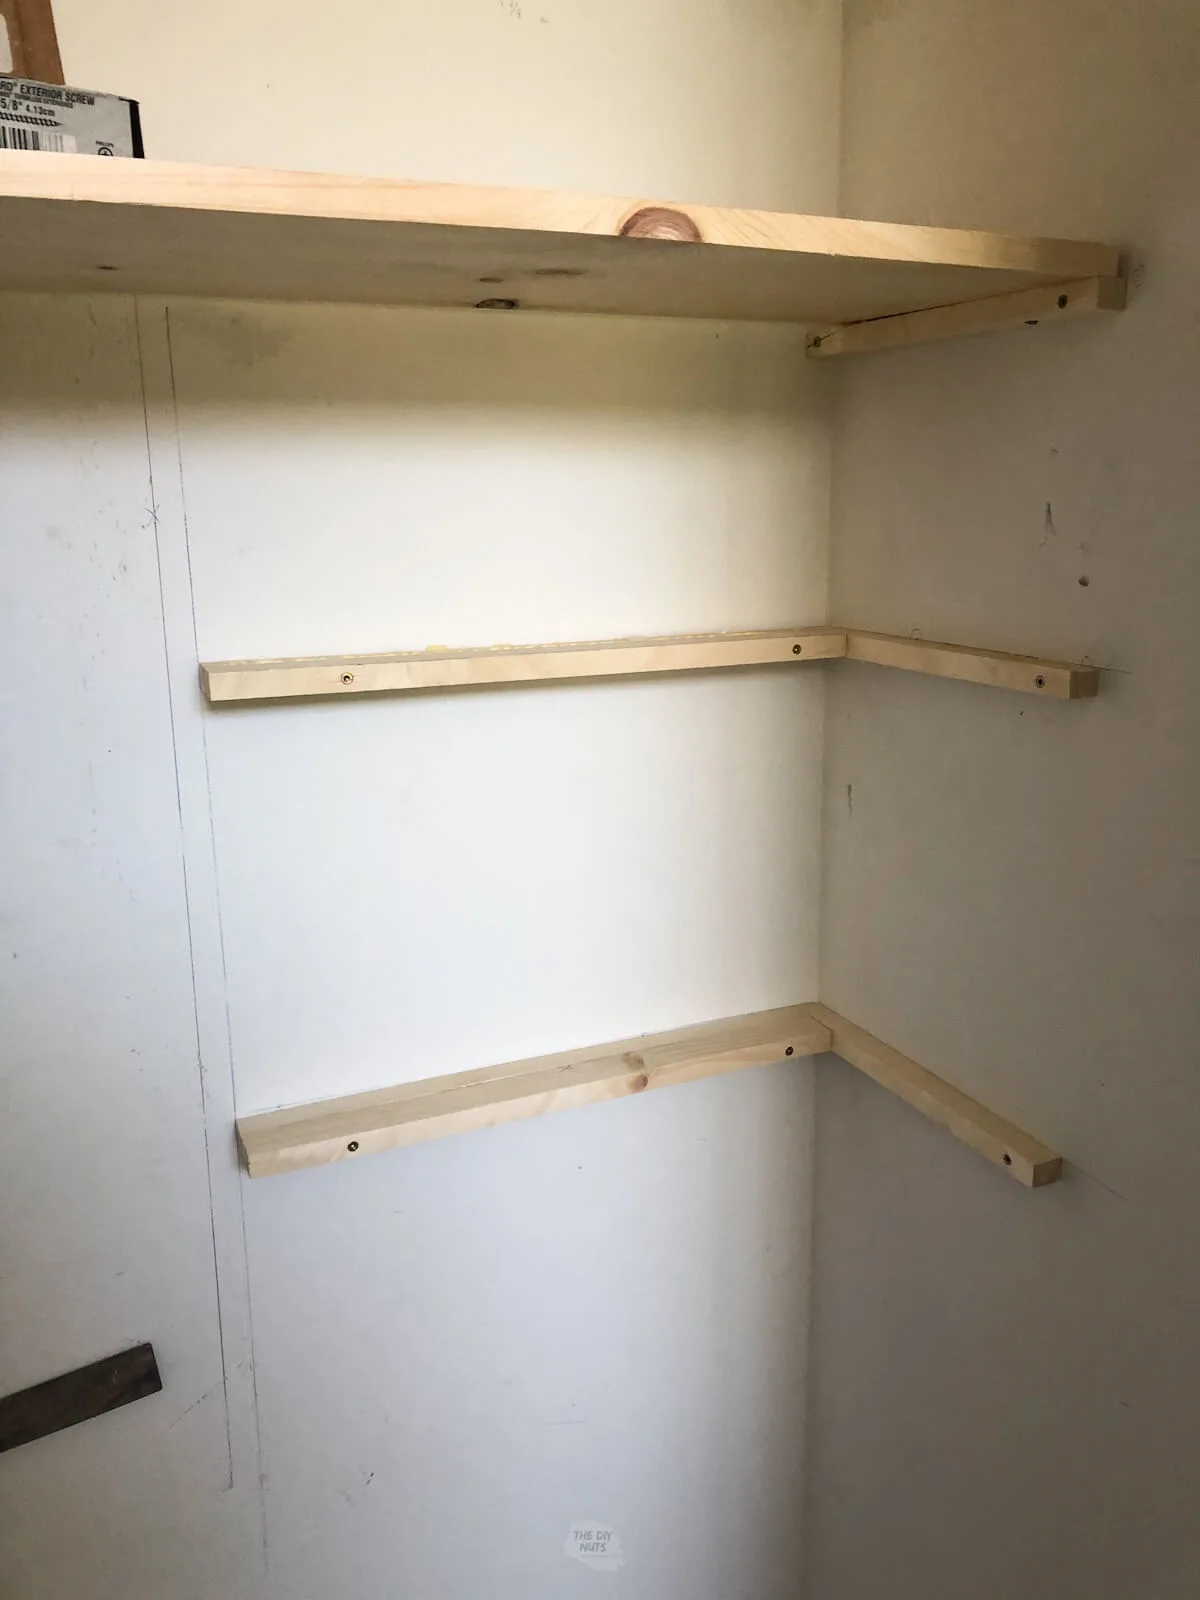 adding more pine wood brackets for wood closet shelves under two larger shelves.